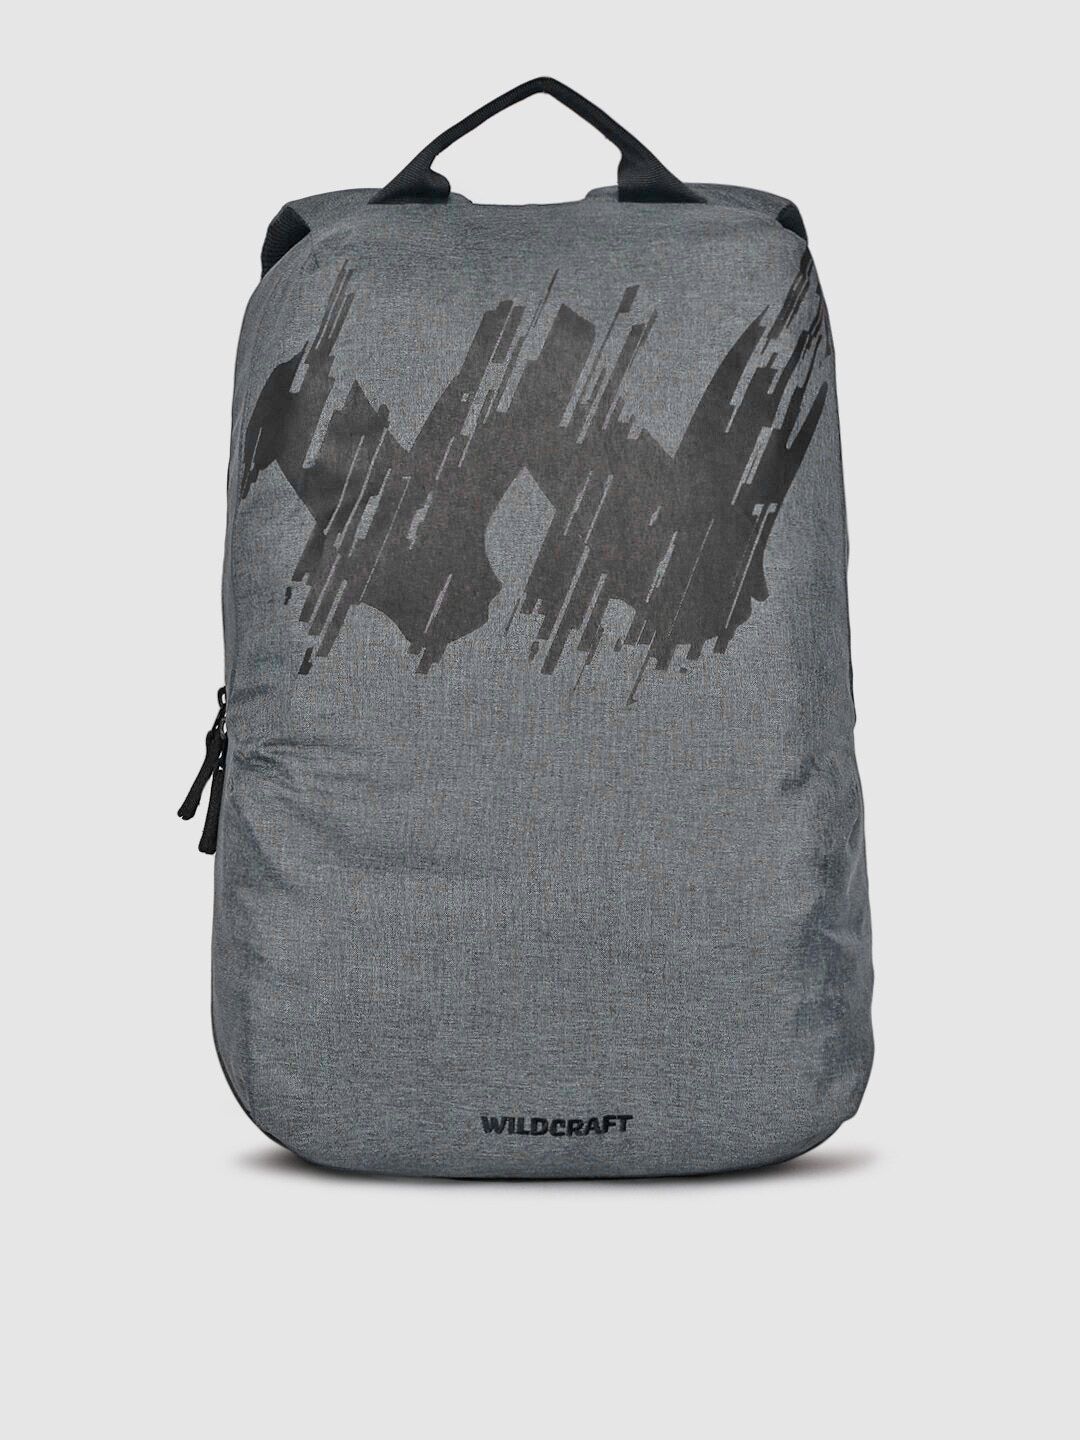 Wildcraft Unisex Black Brand Logo Backpack Price in India